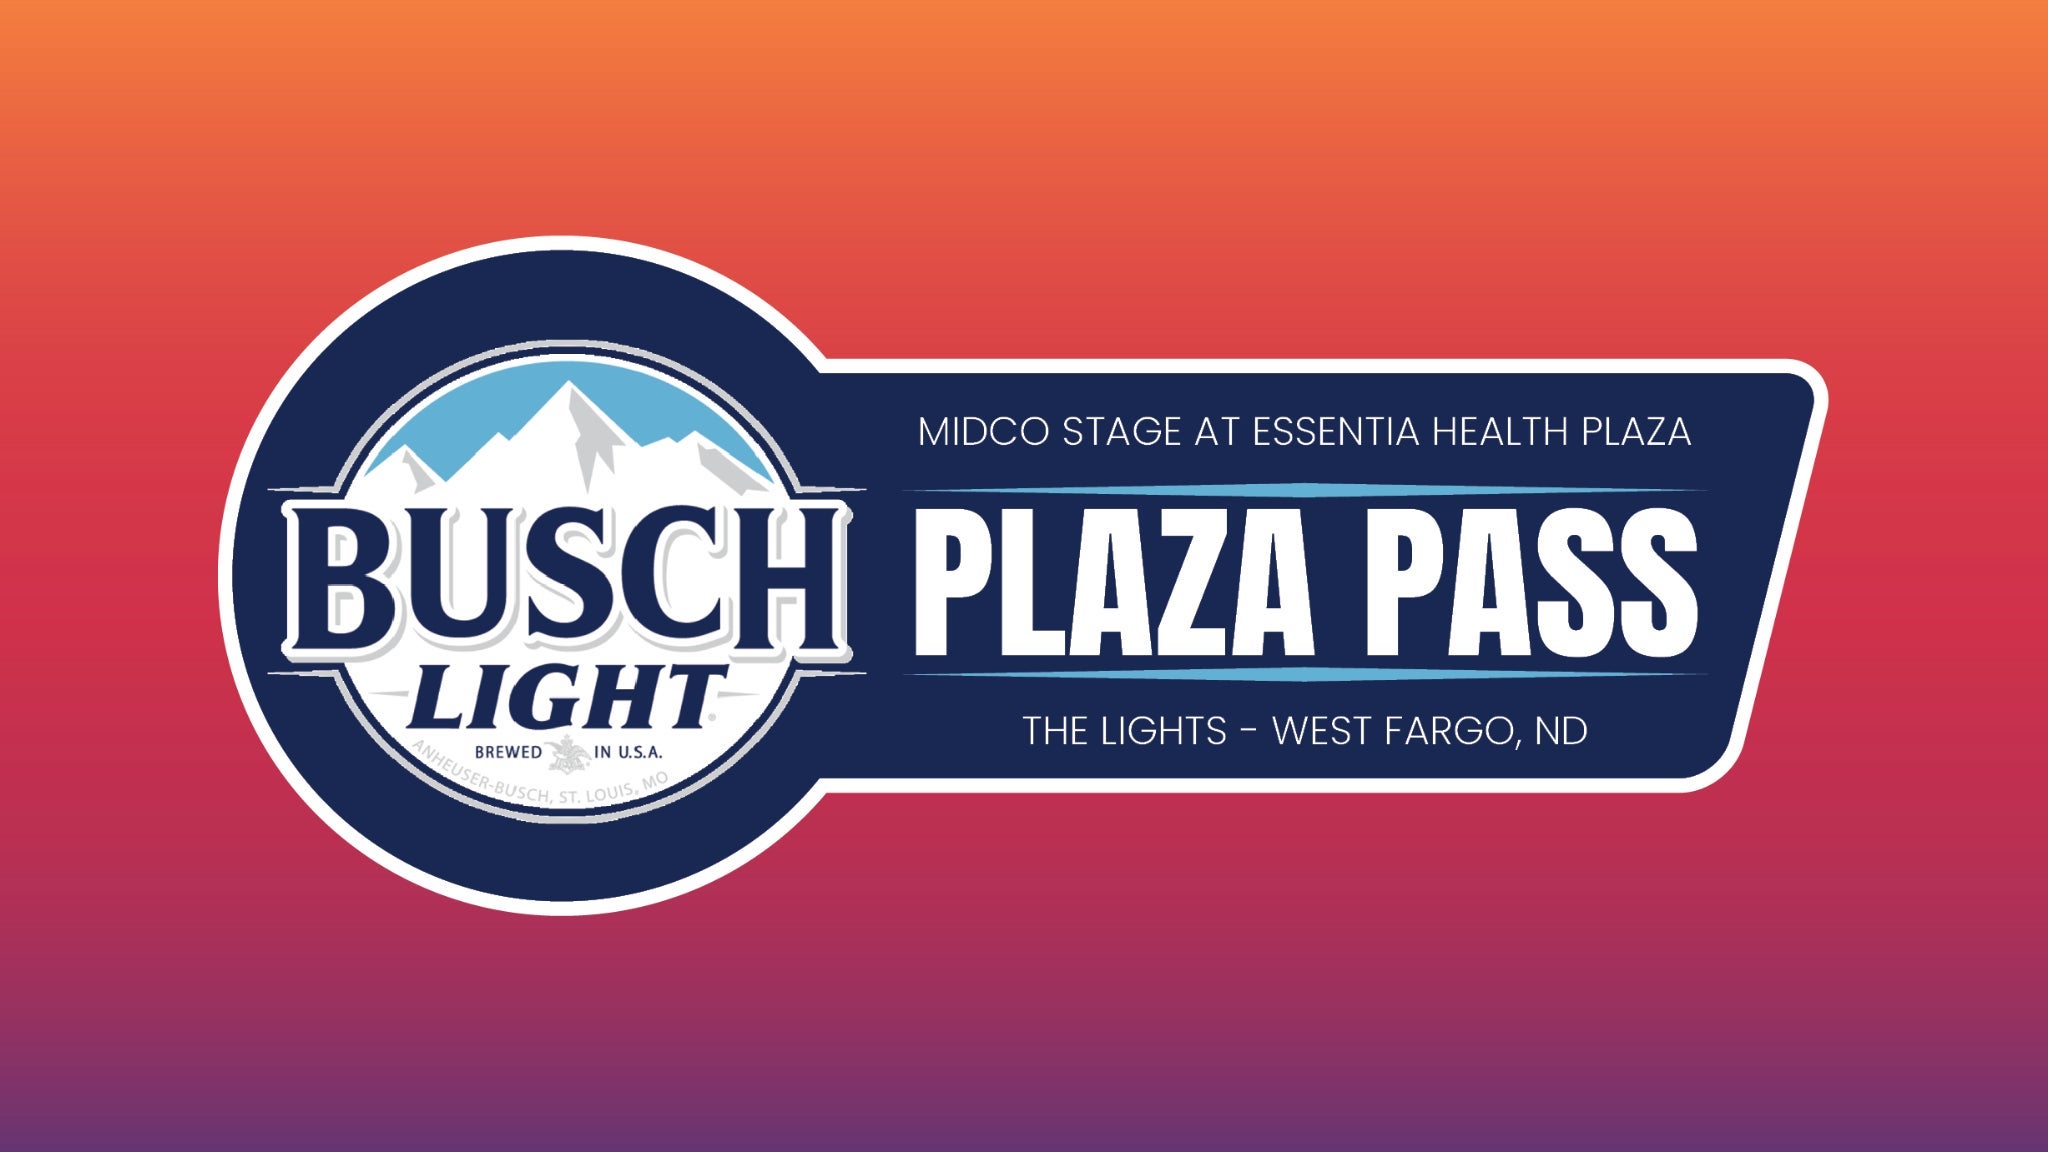 Busch Light Plaza Pass presale information on freepresalepasswords.com